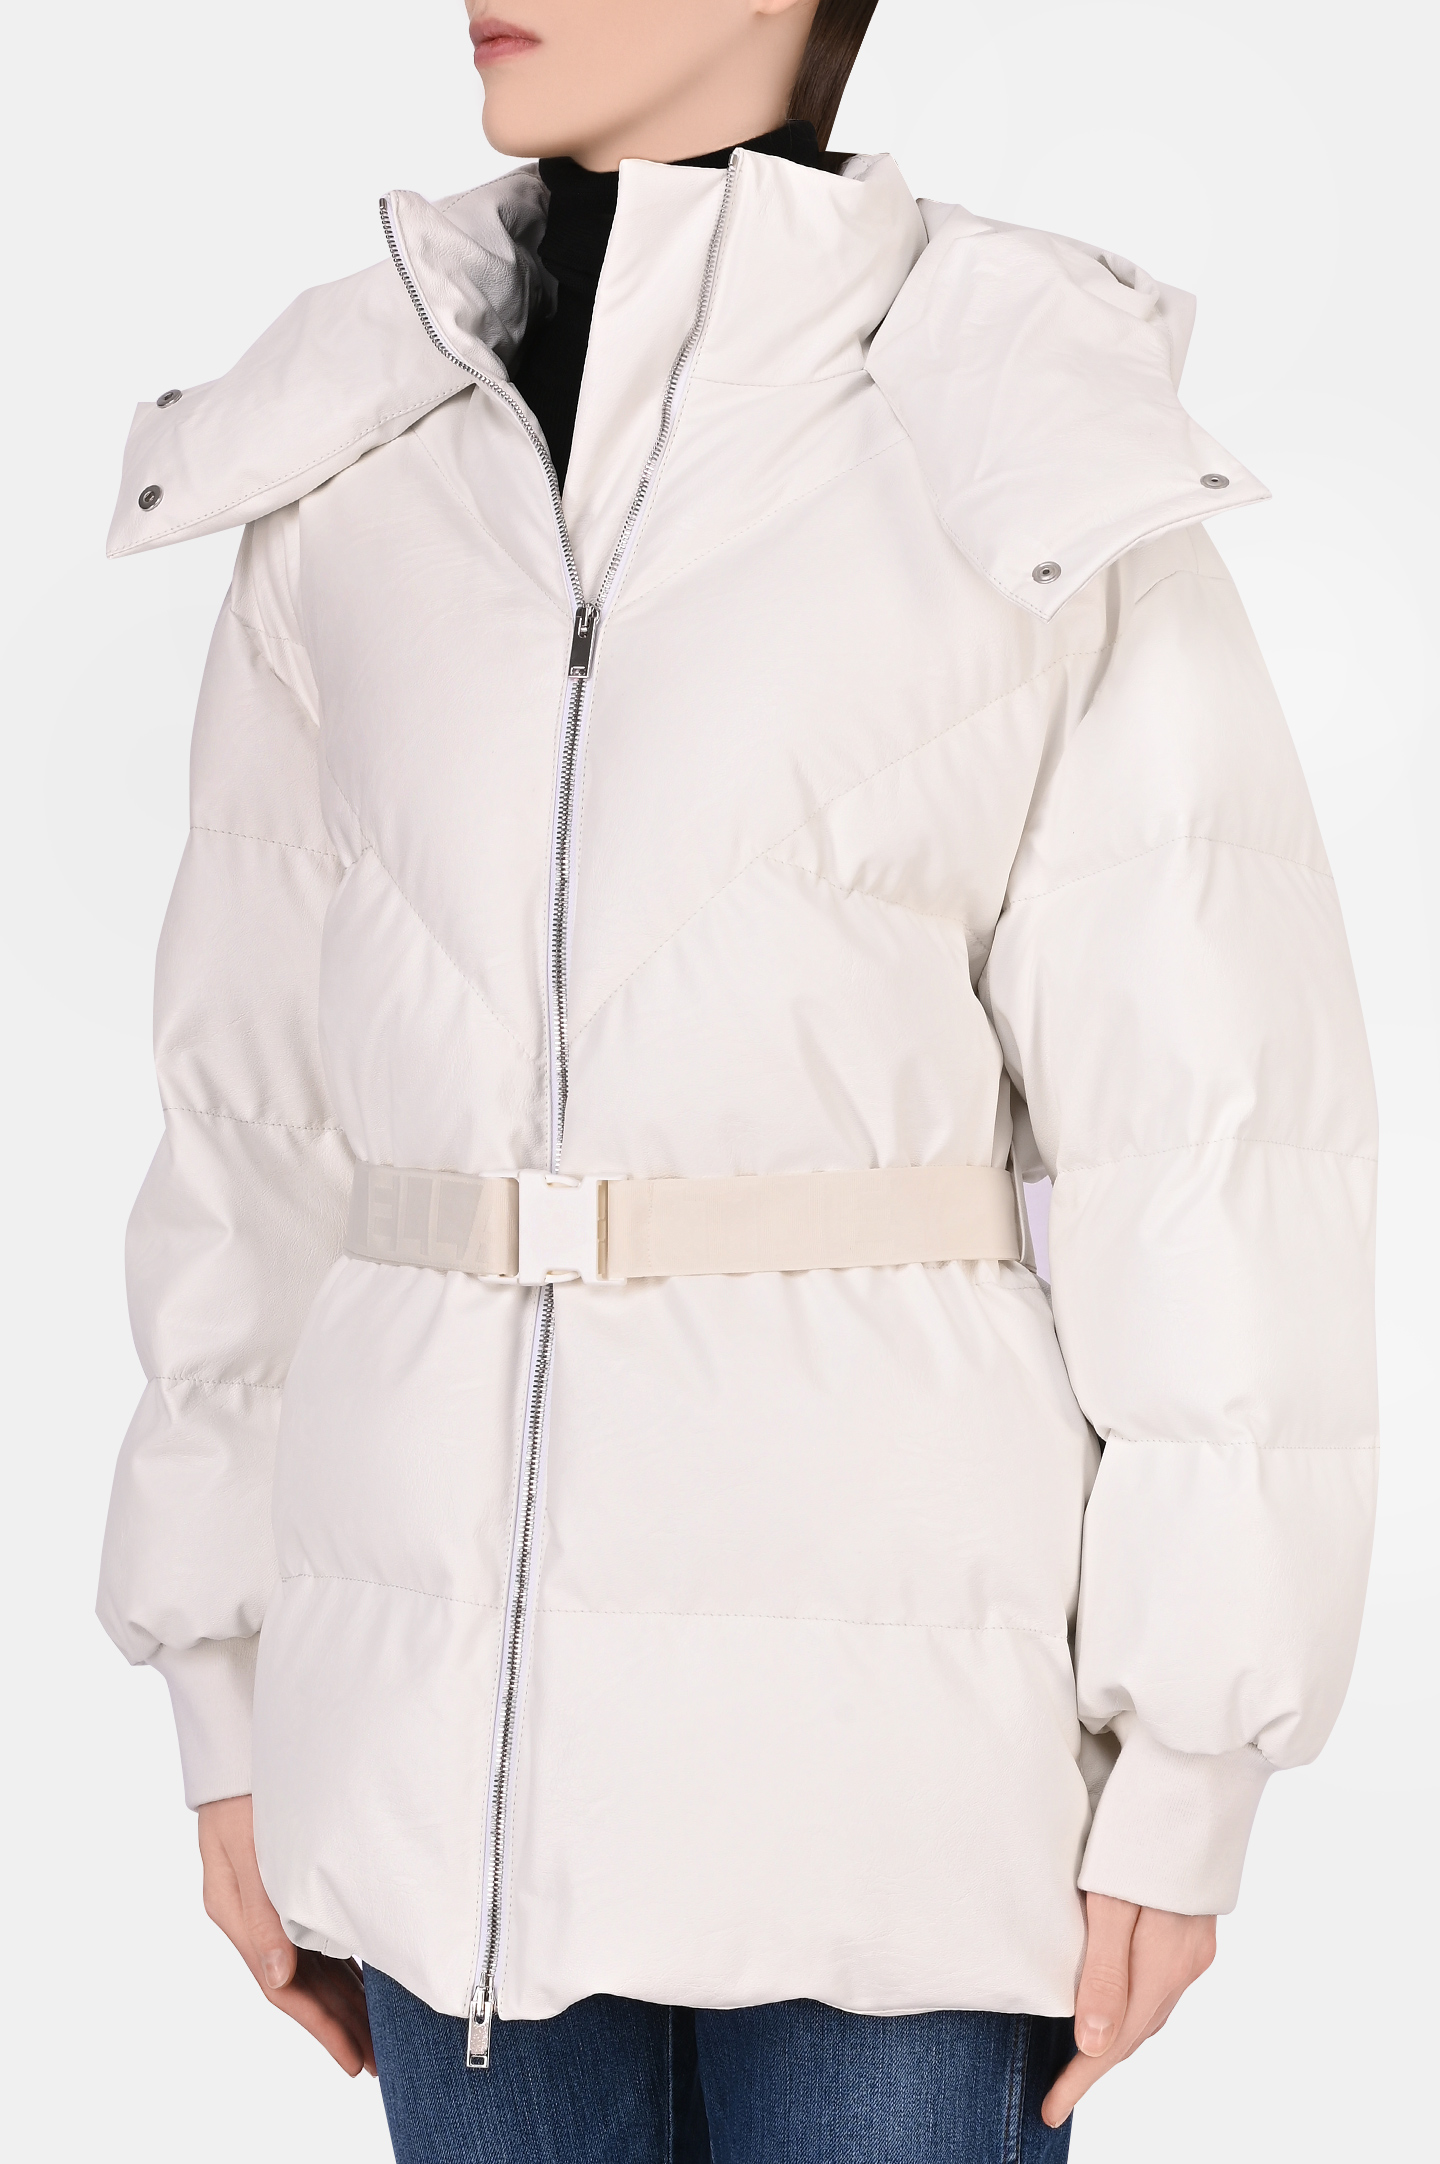 Куртка STELLA McCARTNEY 603717SKB20, цвет: Белый, Женский